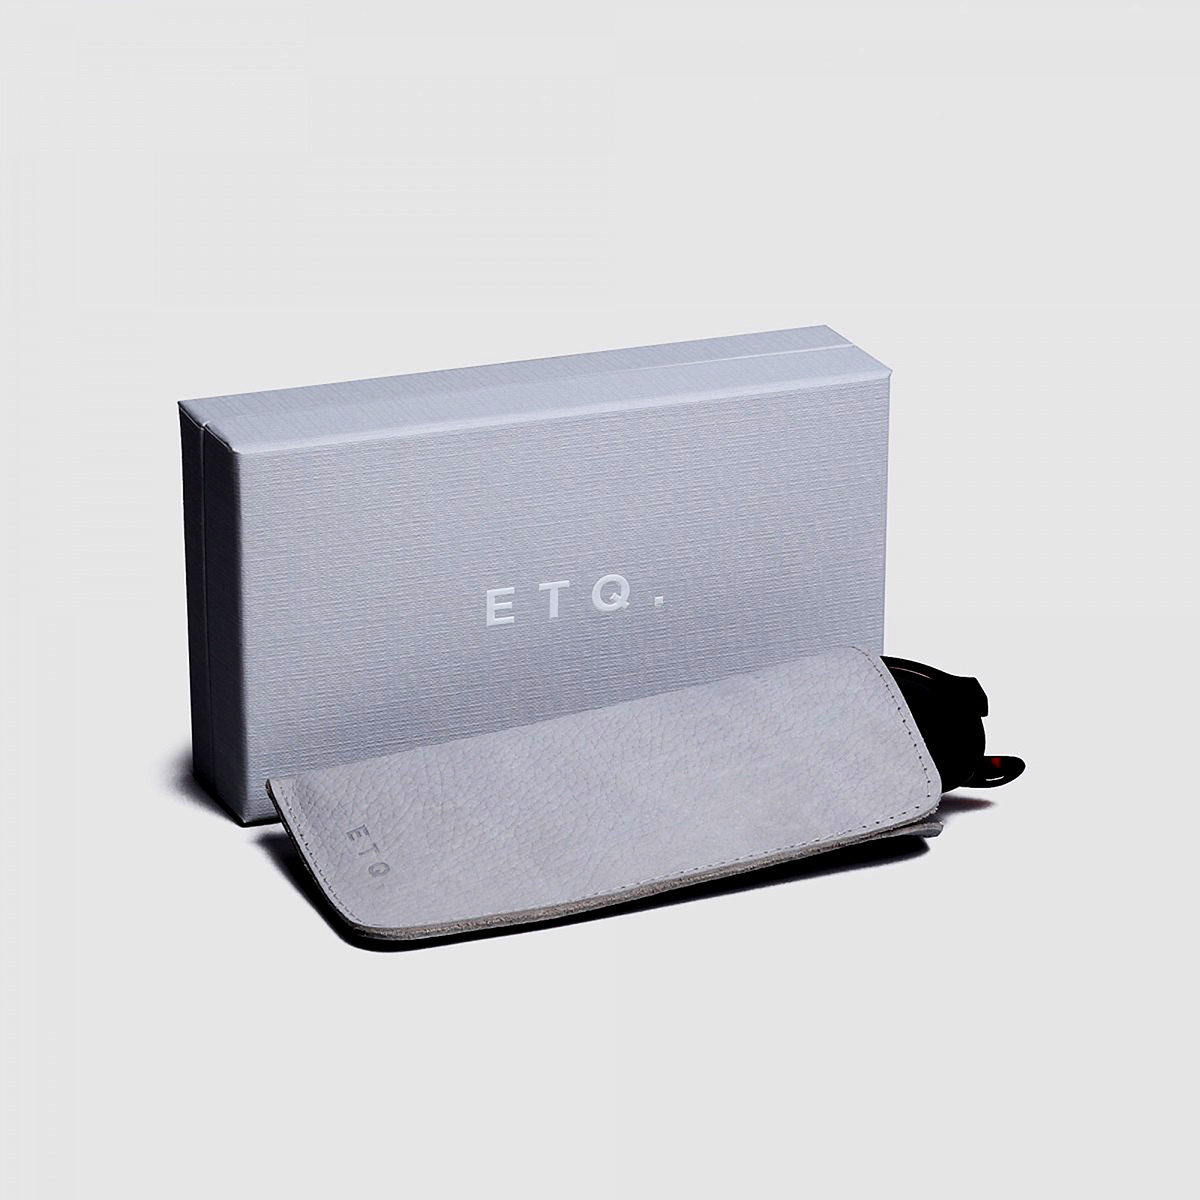 ETQ. amsterdam shoes sneakers footwear premium product webshop minimalistic clean